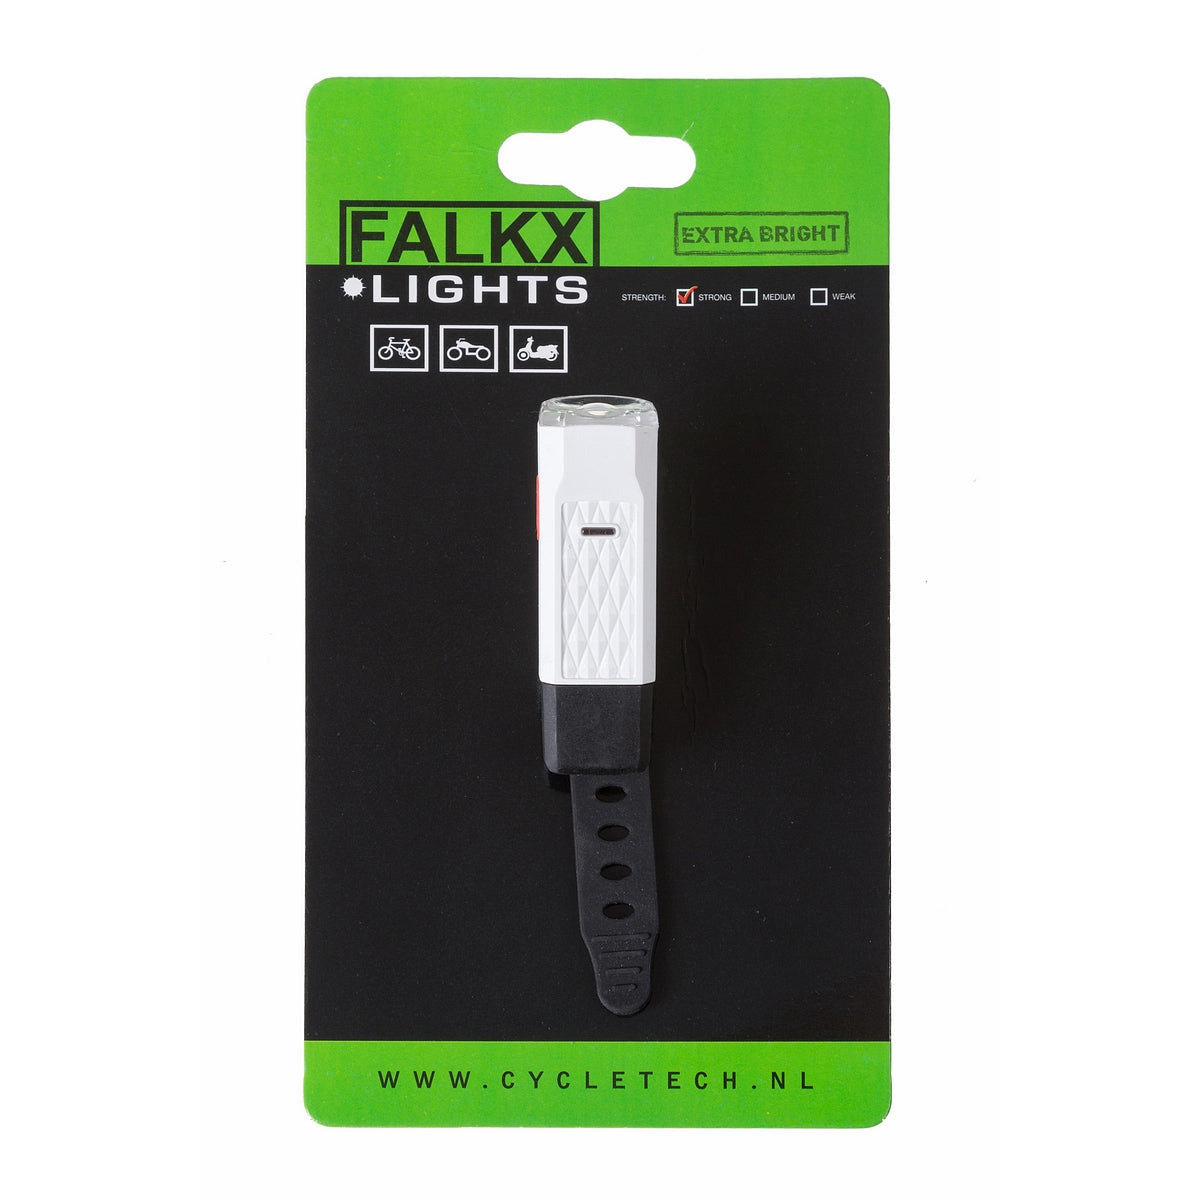 FALKX Mini koplamp LED. USB oplaadbaar (hangverpakking).